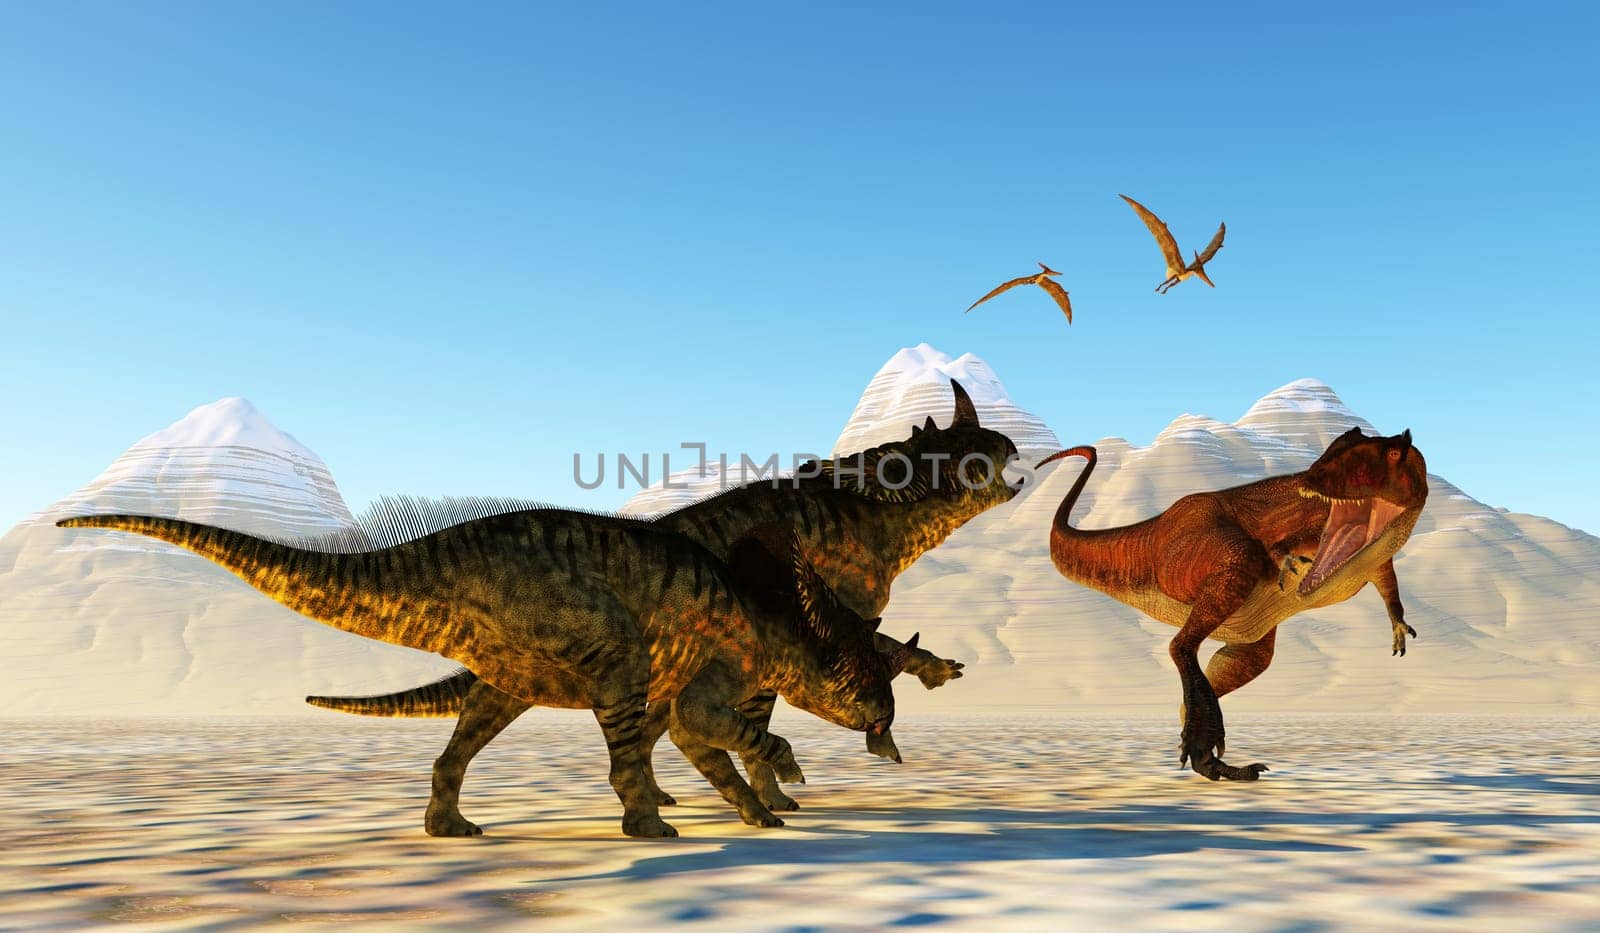 Flying Pteranodon reptiles watch as Carcharodontosaurus attacks Brachyceratops dinosaurs.